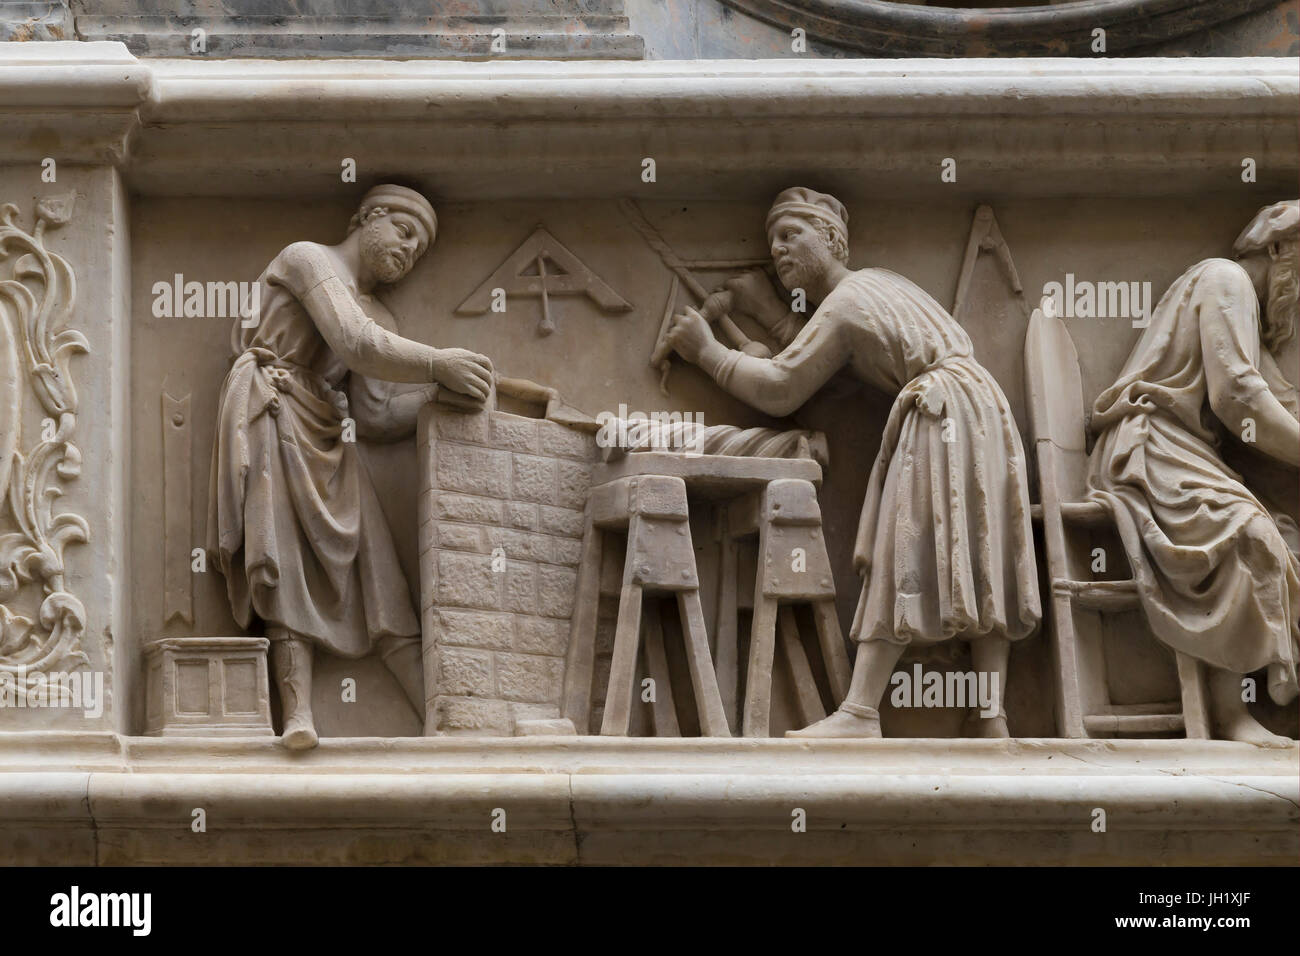 Orsanmichele tallas de pared, del gremio de los carpinteros, Florencia, Italia, Europa Foto de stock